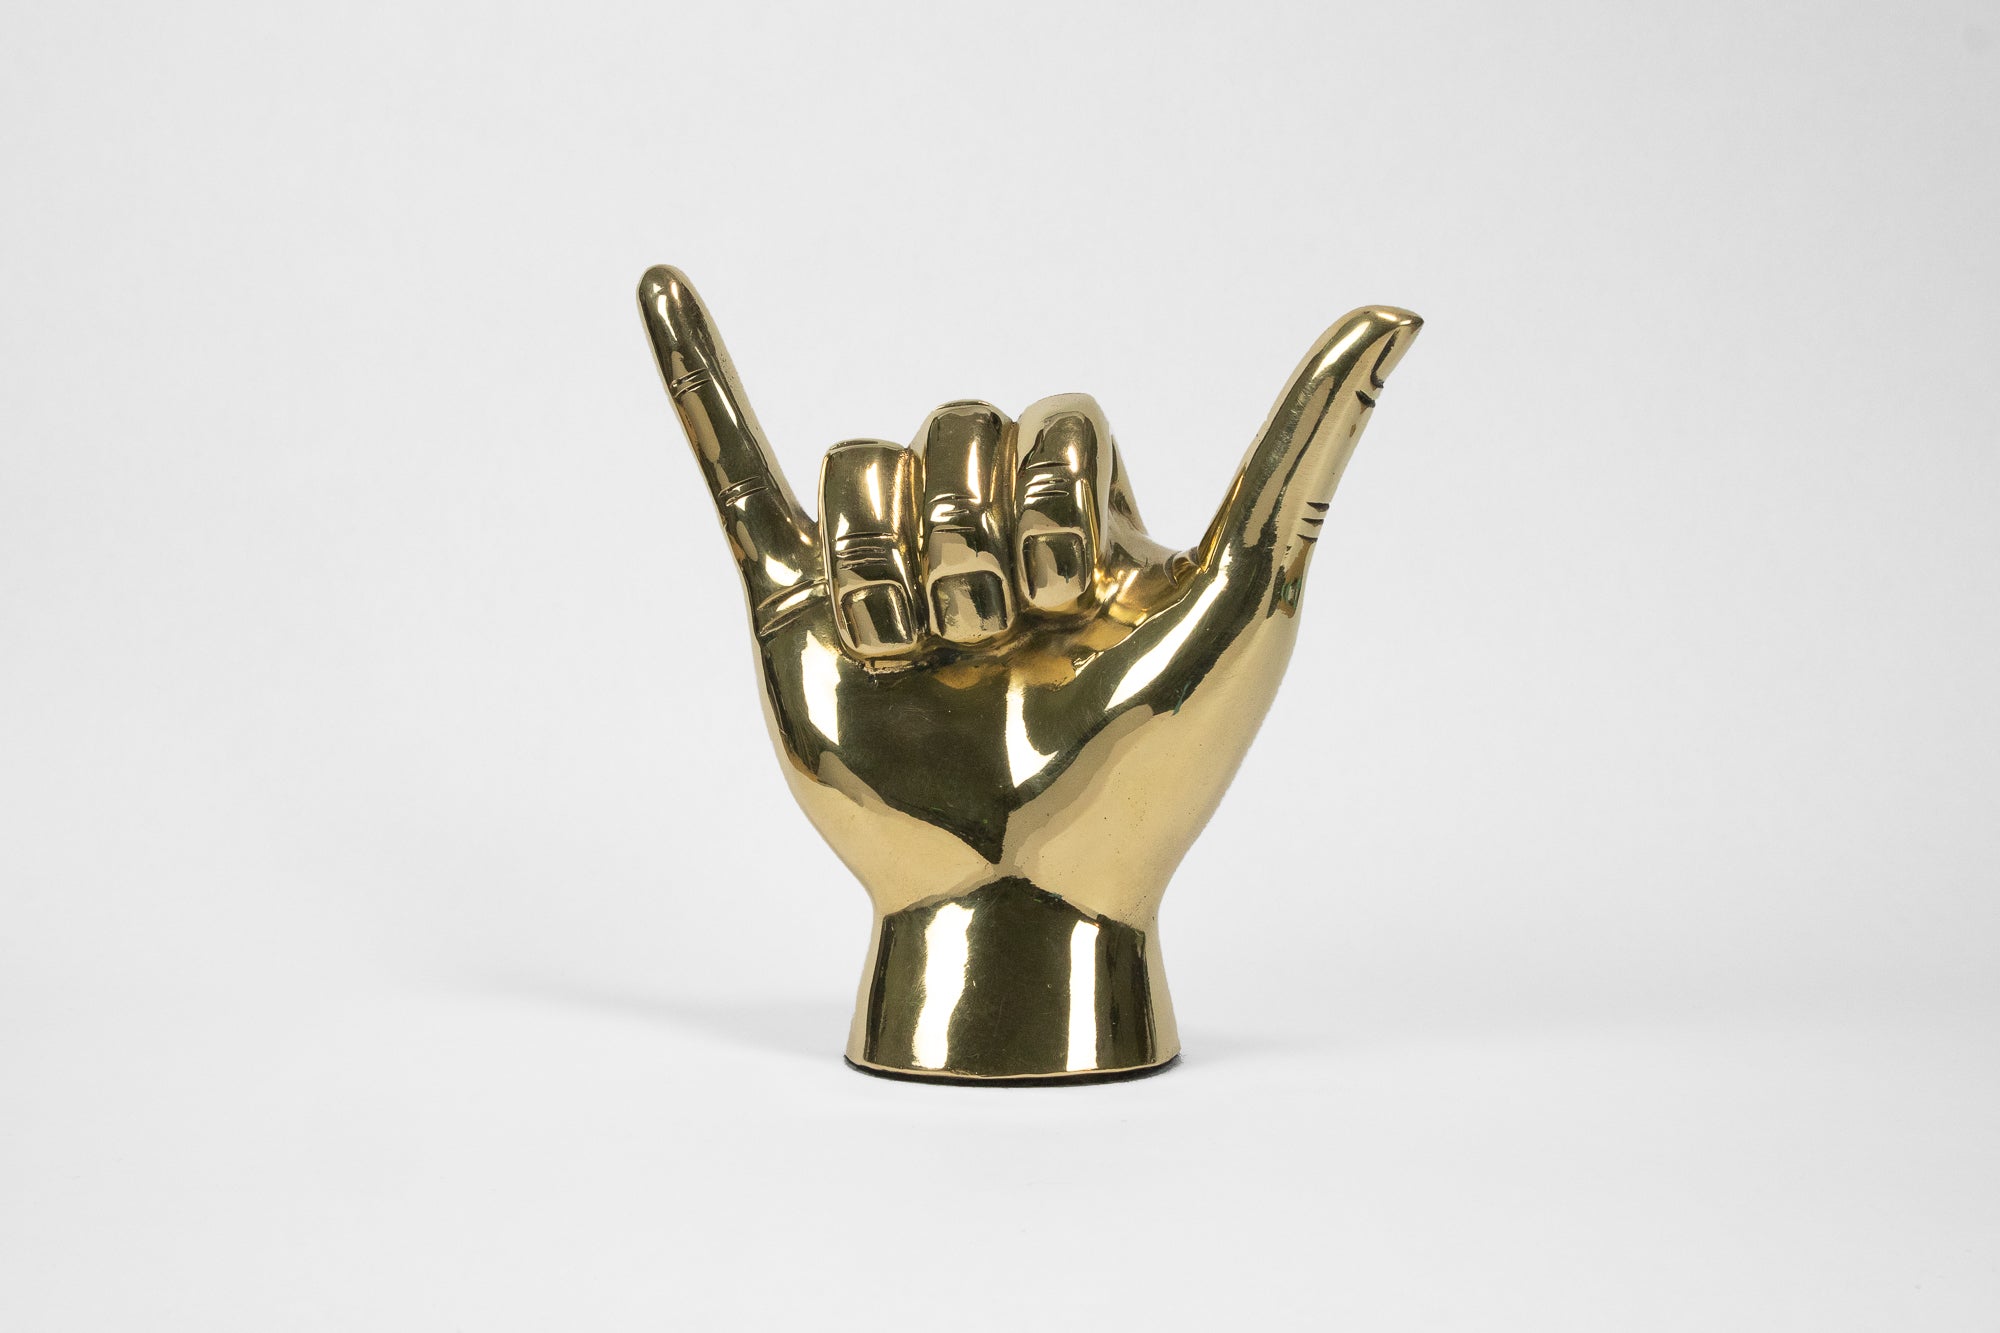 Shaka Hand Sign Sculpture in Brass – PRIZE